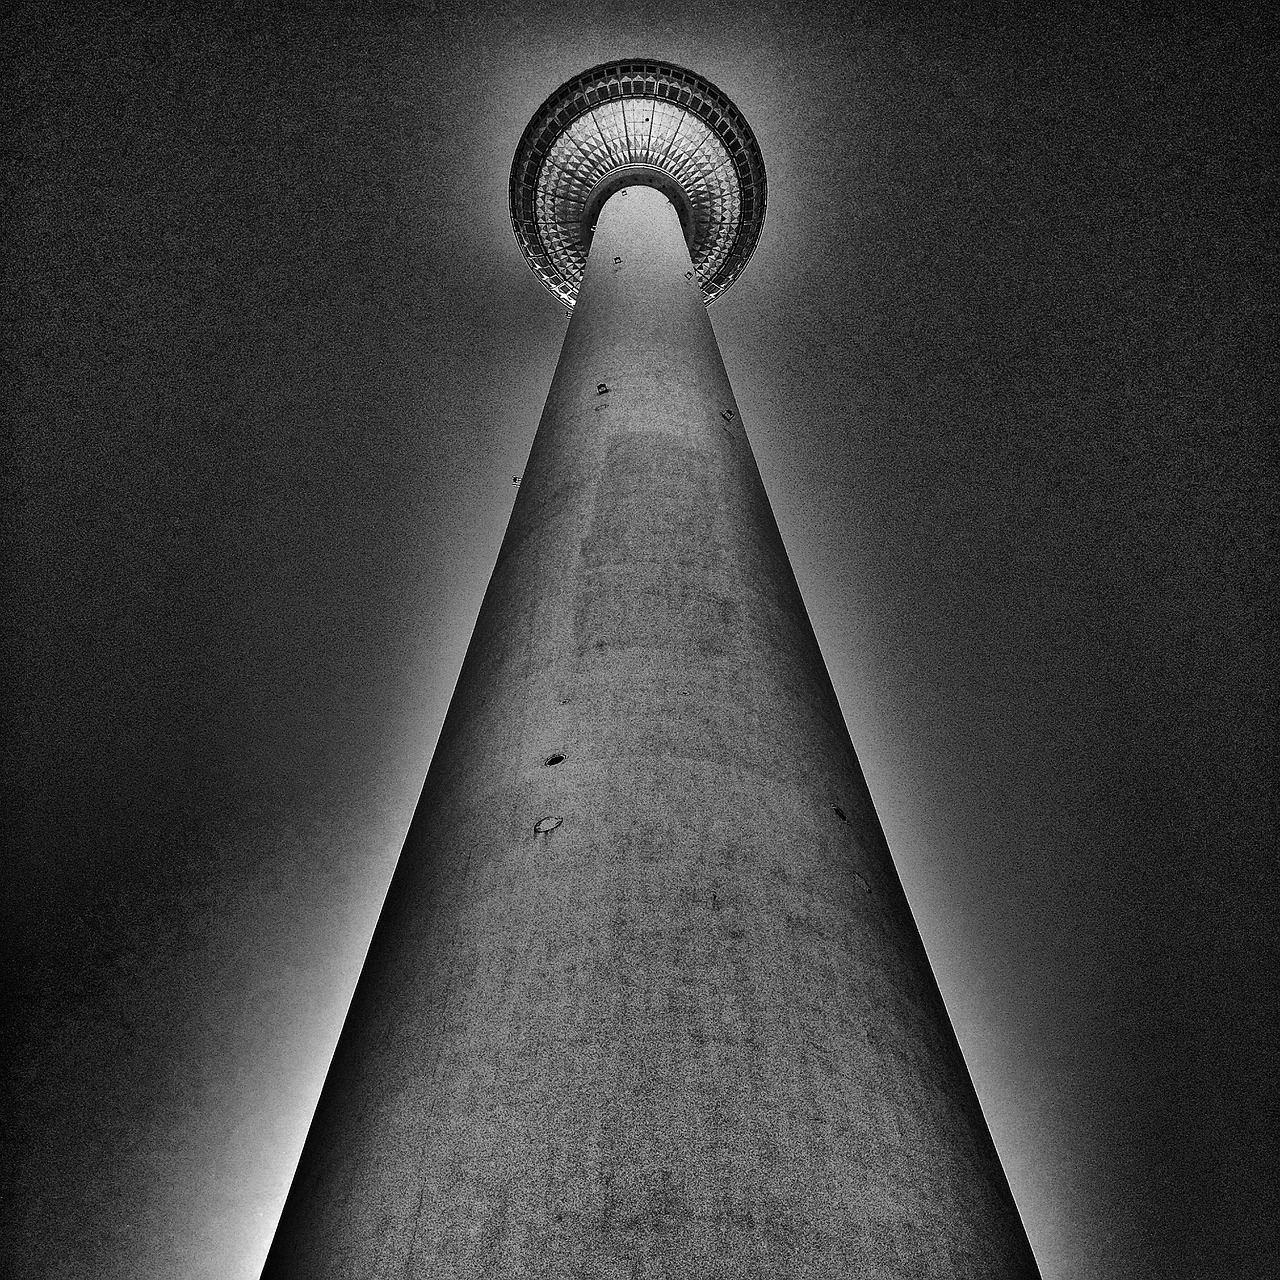 berlin tv tower alexanderplatz free photo